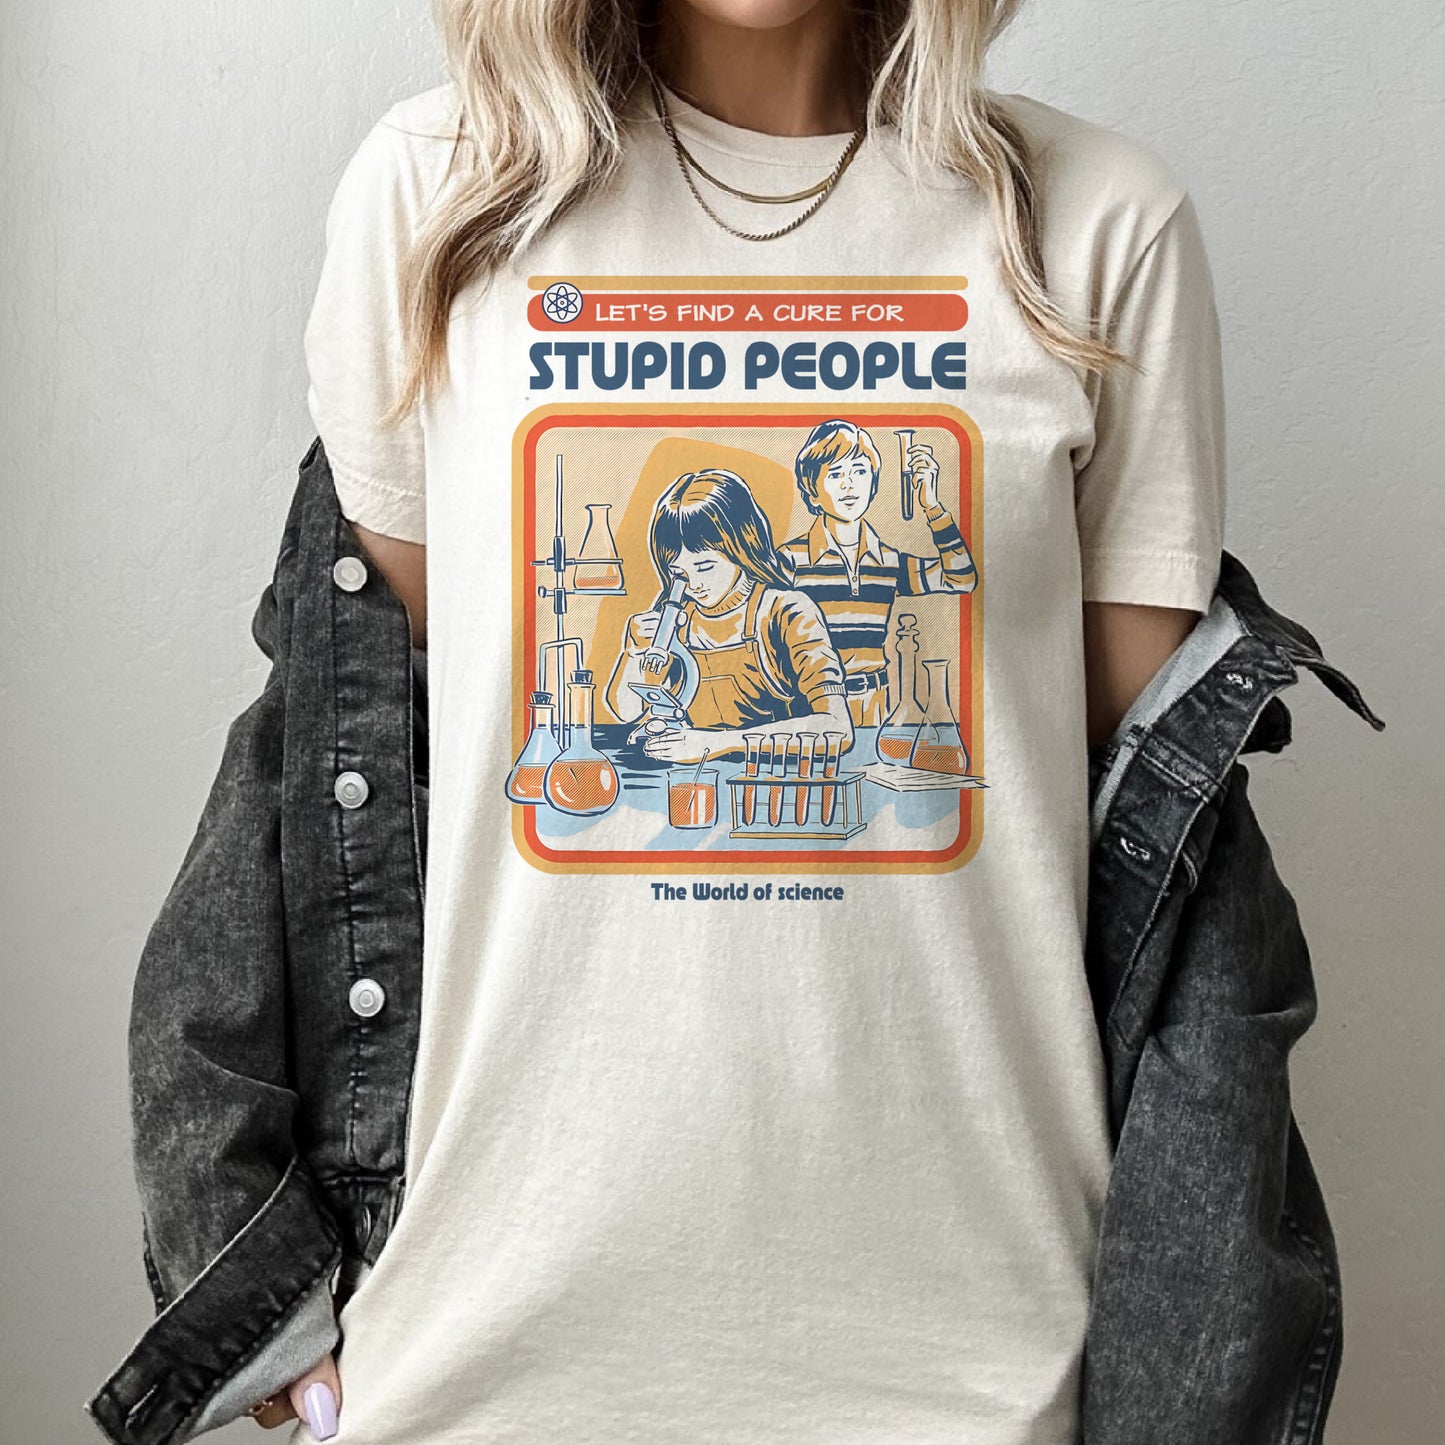 Stupid People T-Shirt Funny Sarcastic Tshirt Hilarious Fun Shirt Funny Sarcasm Tee Soft Print T-Shirt Sublimation Print Tee